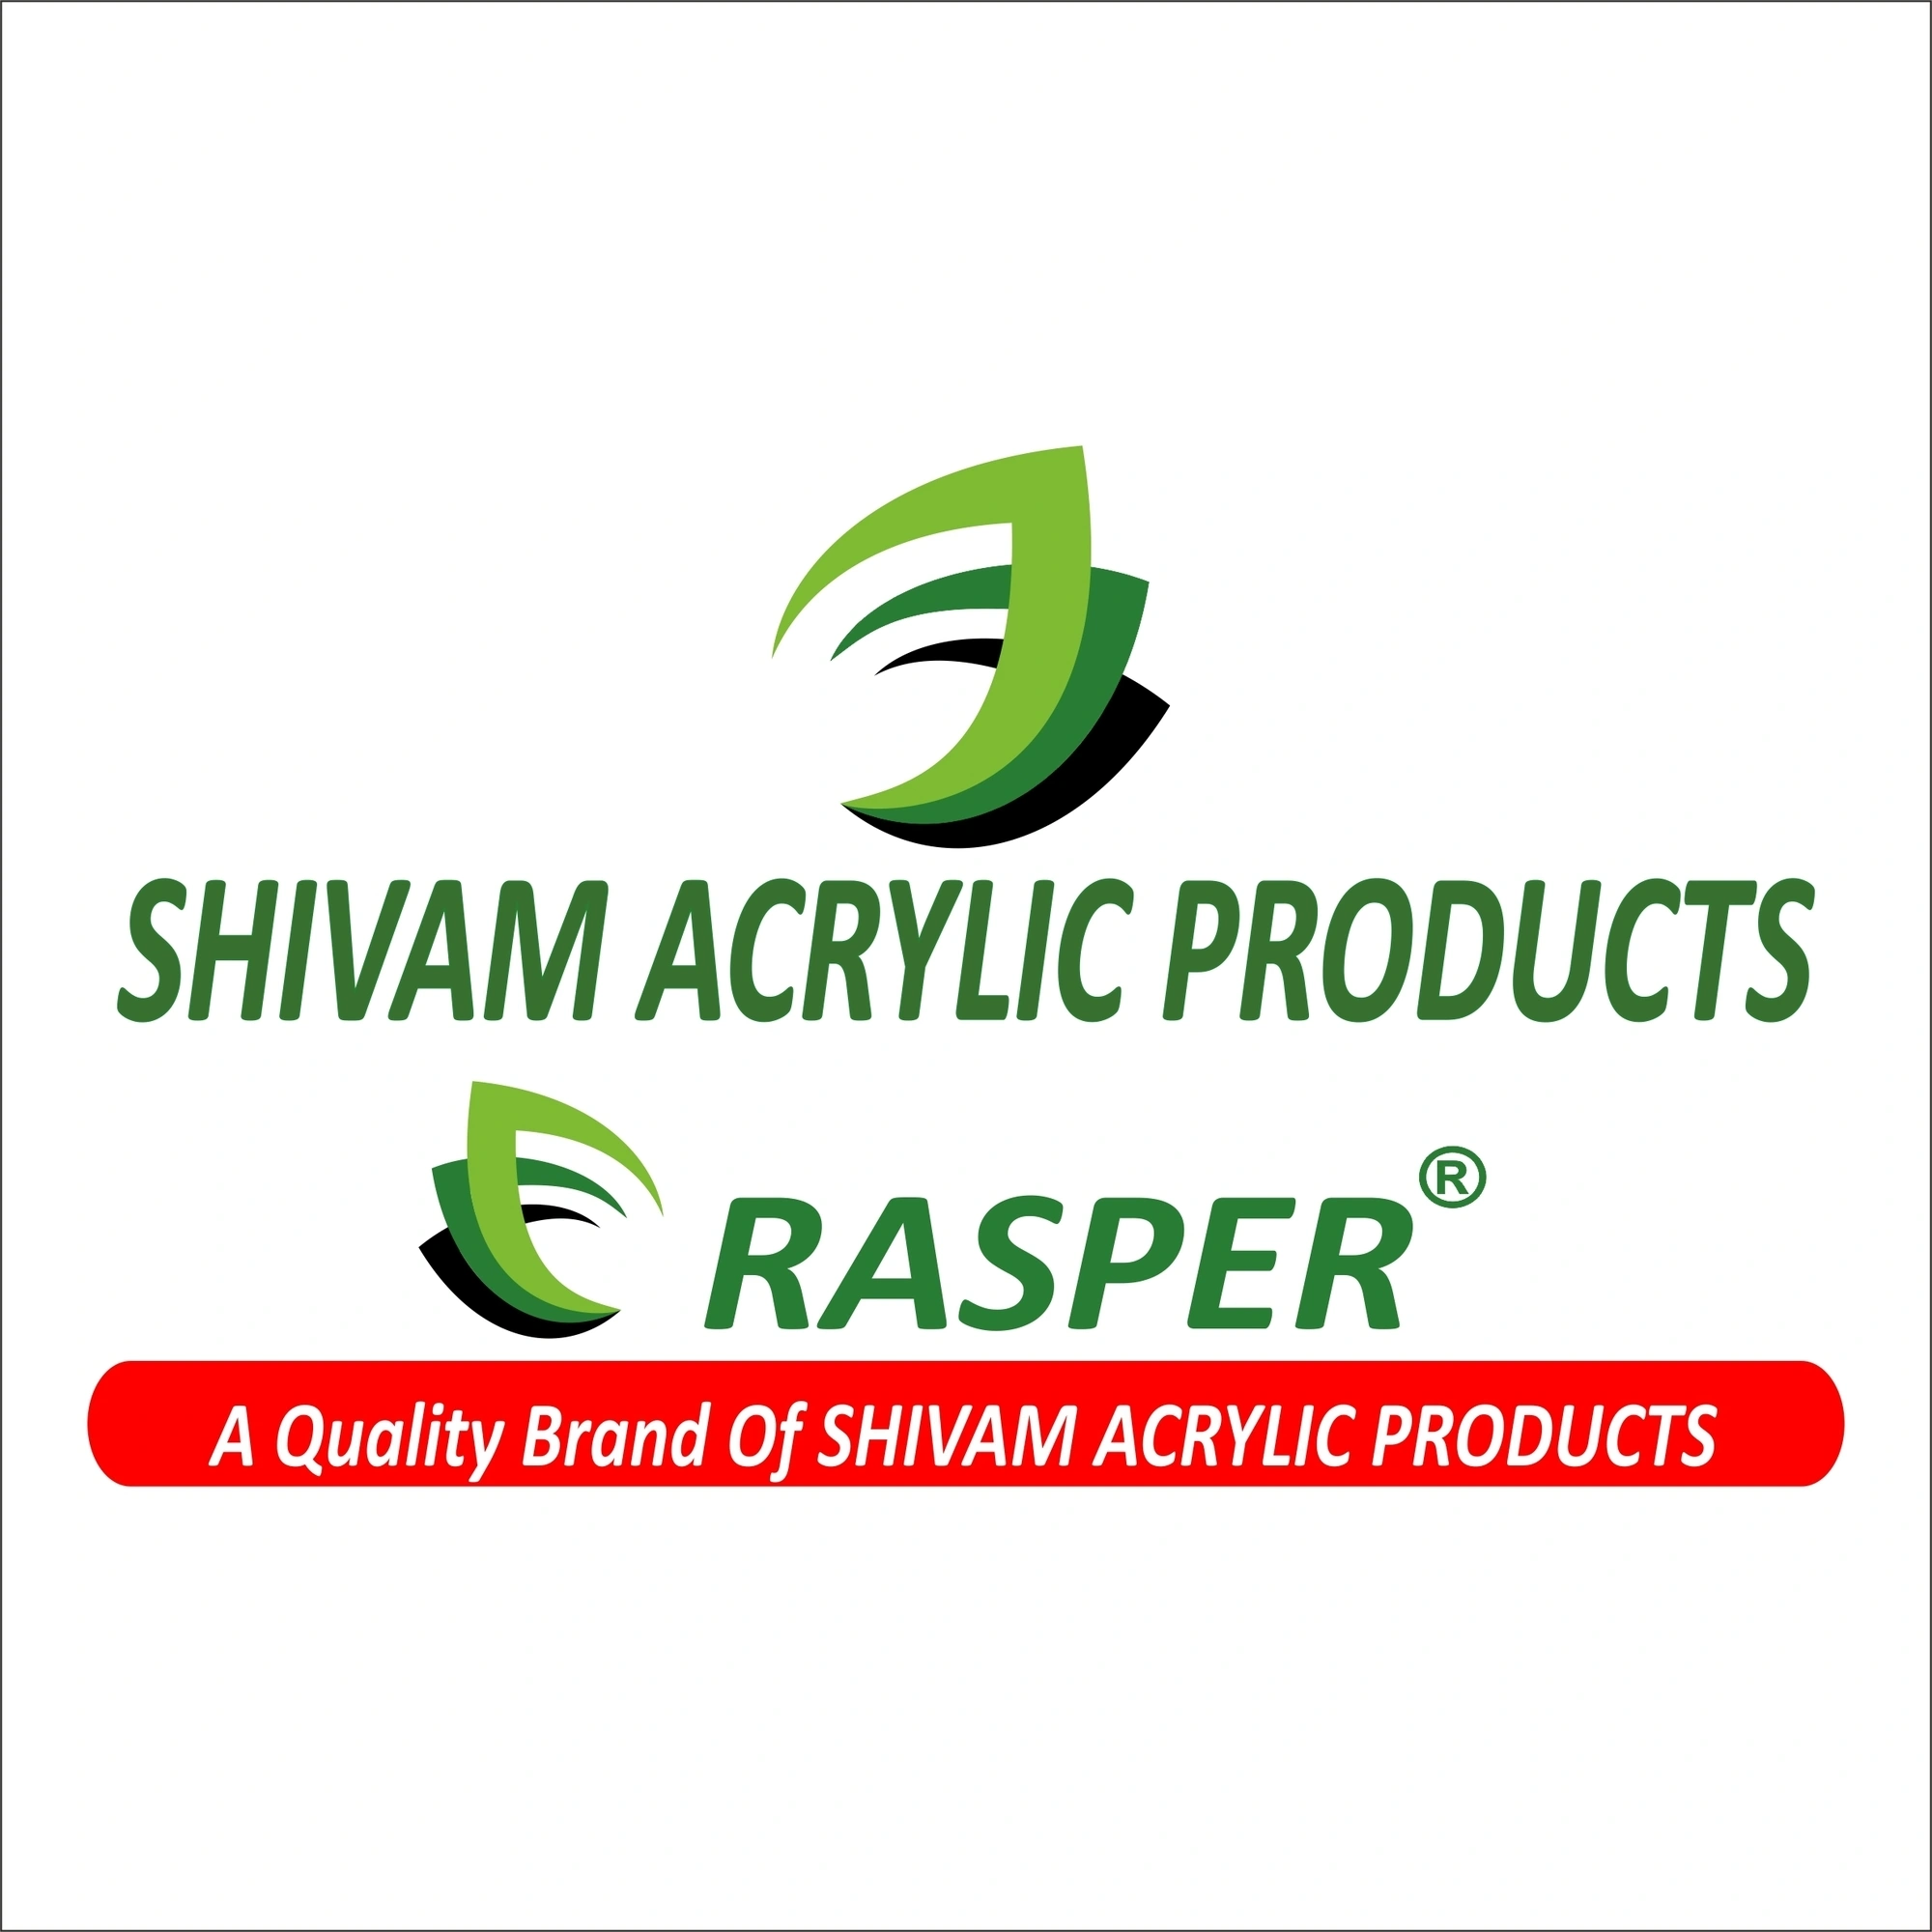 SHIVAM ACRYLIC PRODUCTS